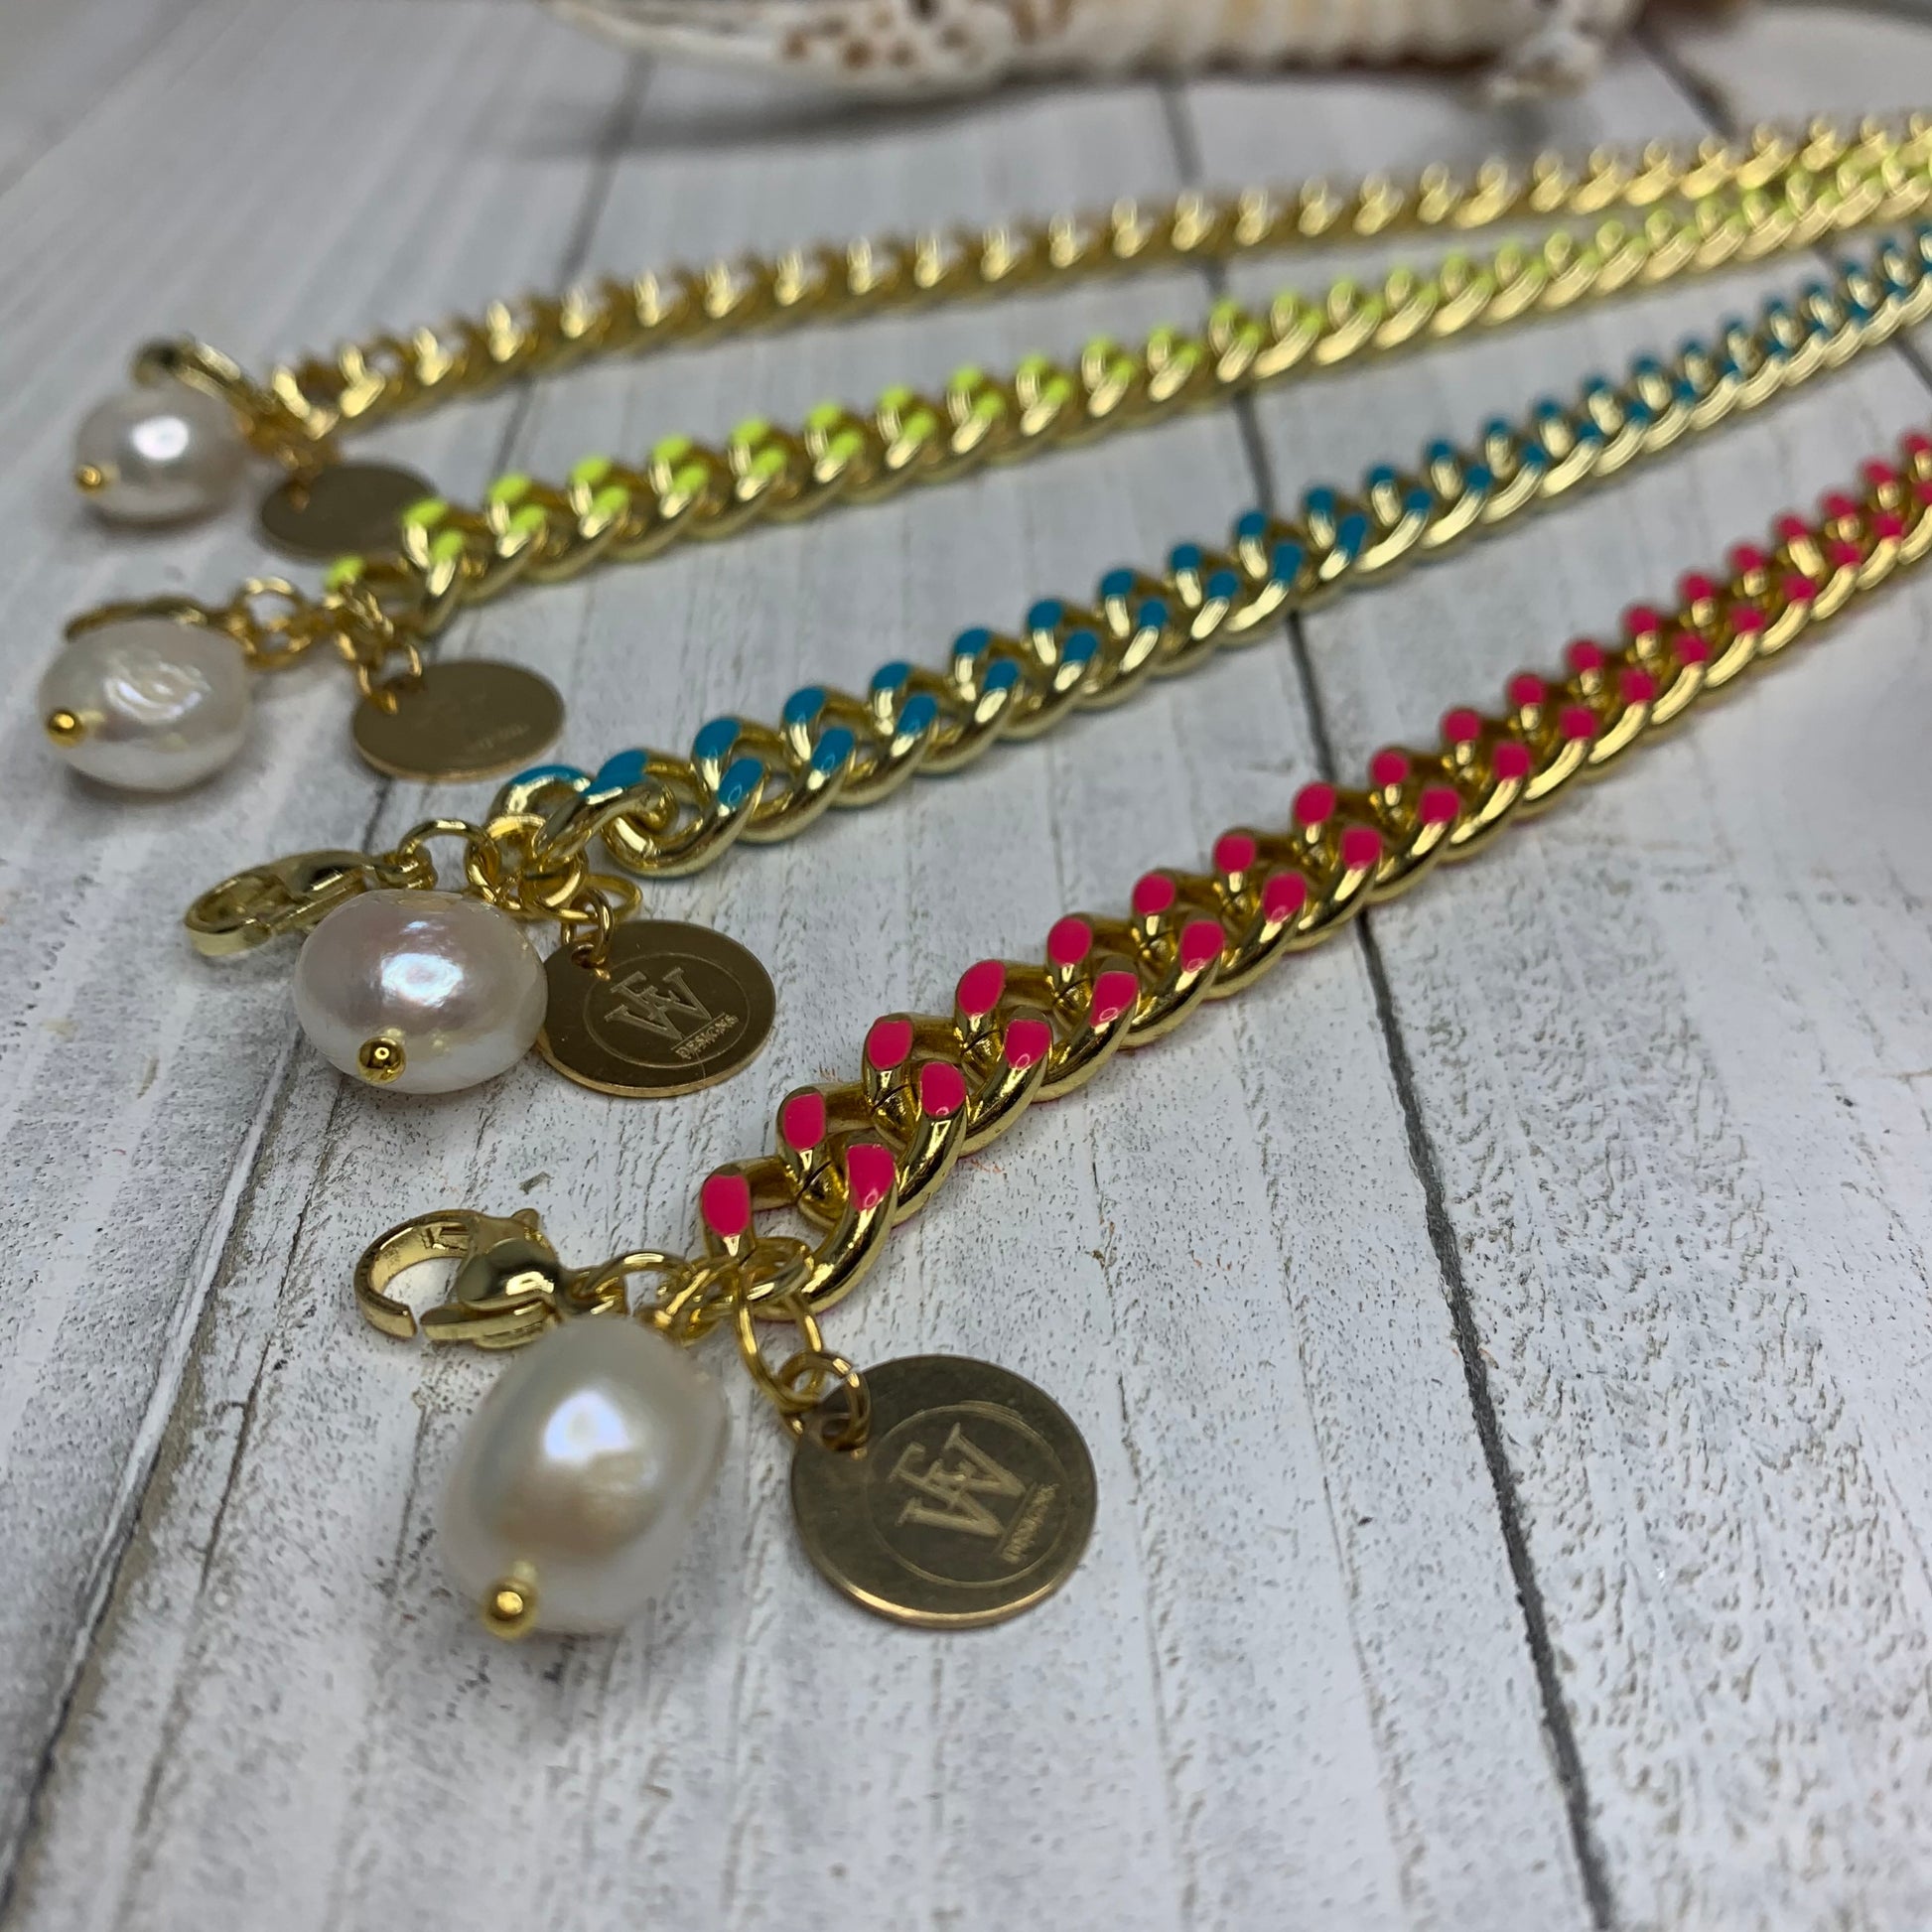 14k gold plated chain with neon enamel embellishments bracelet